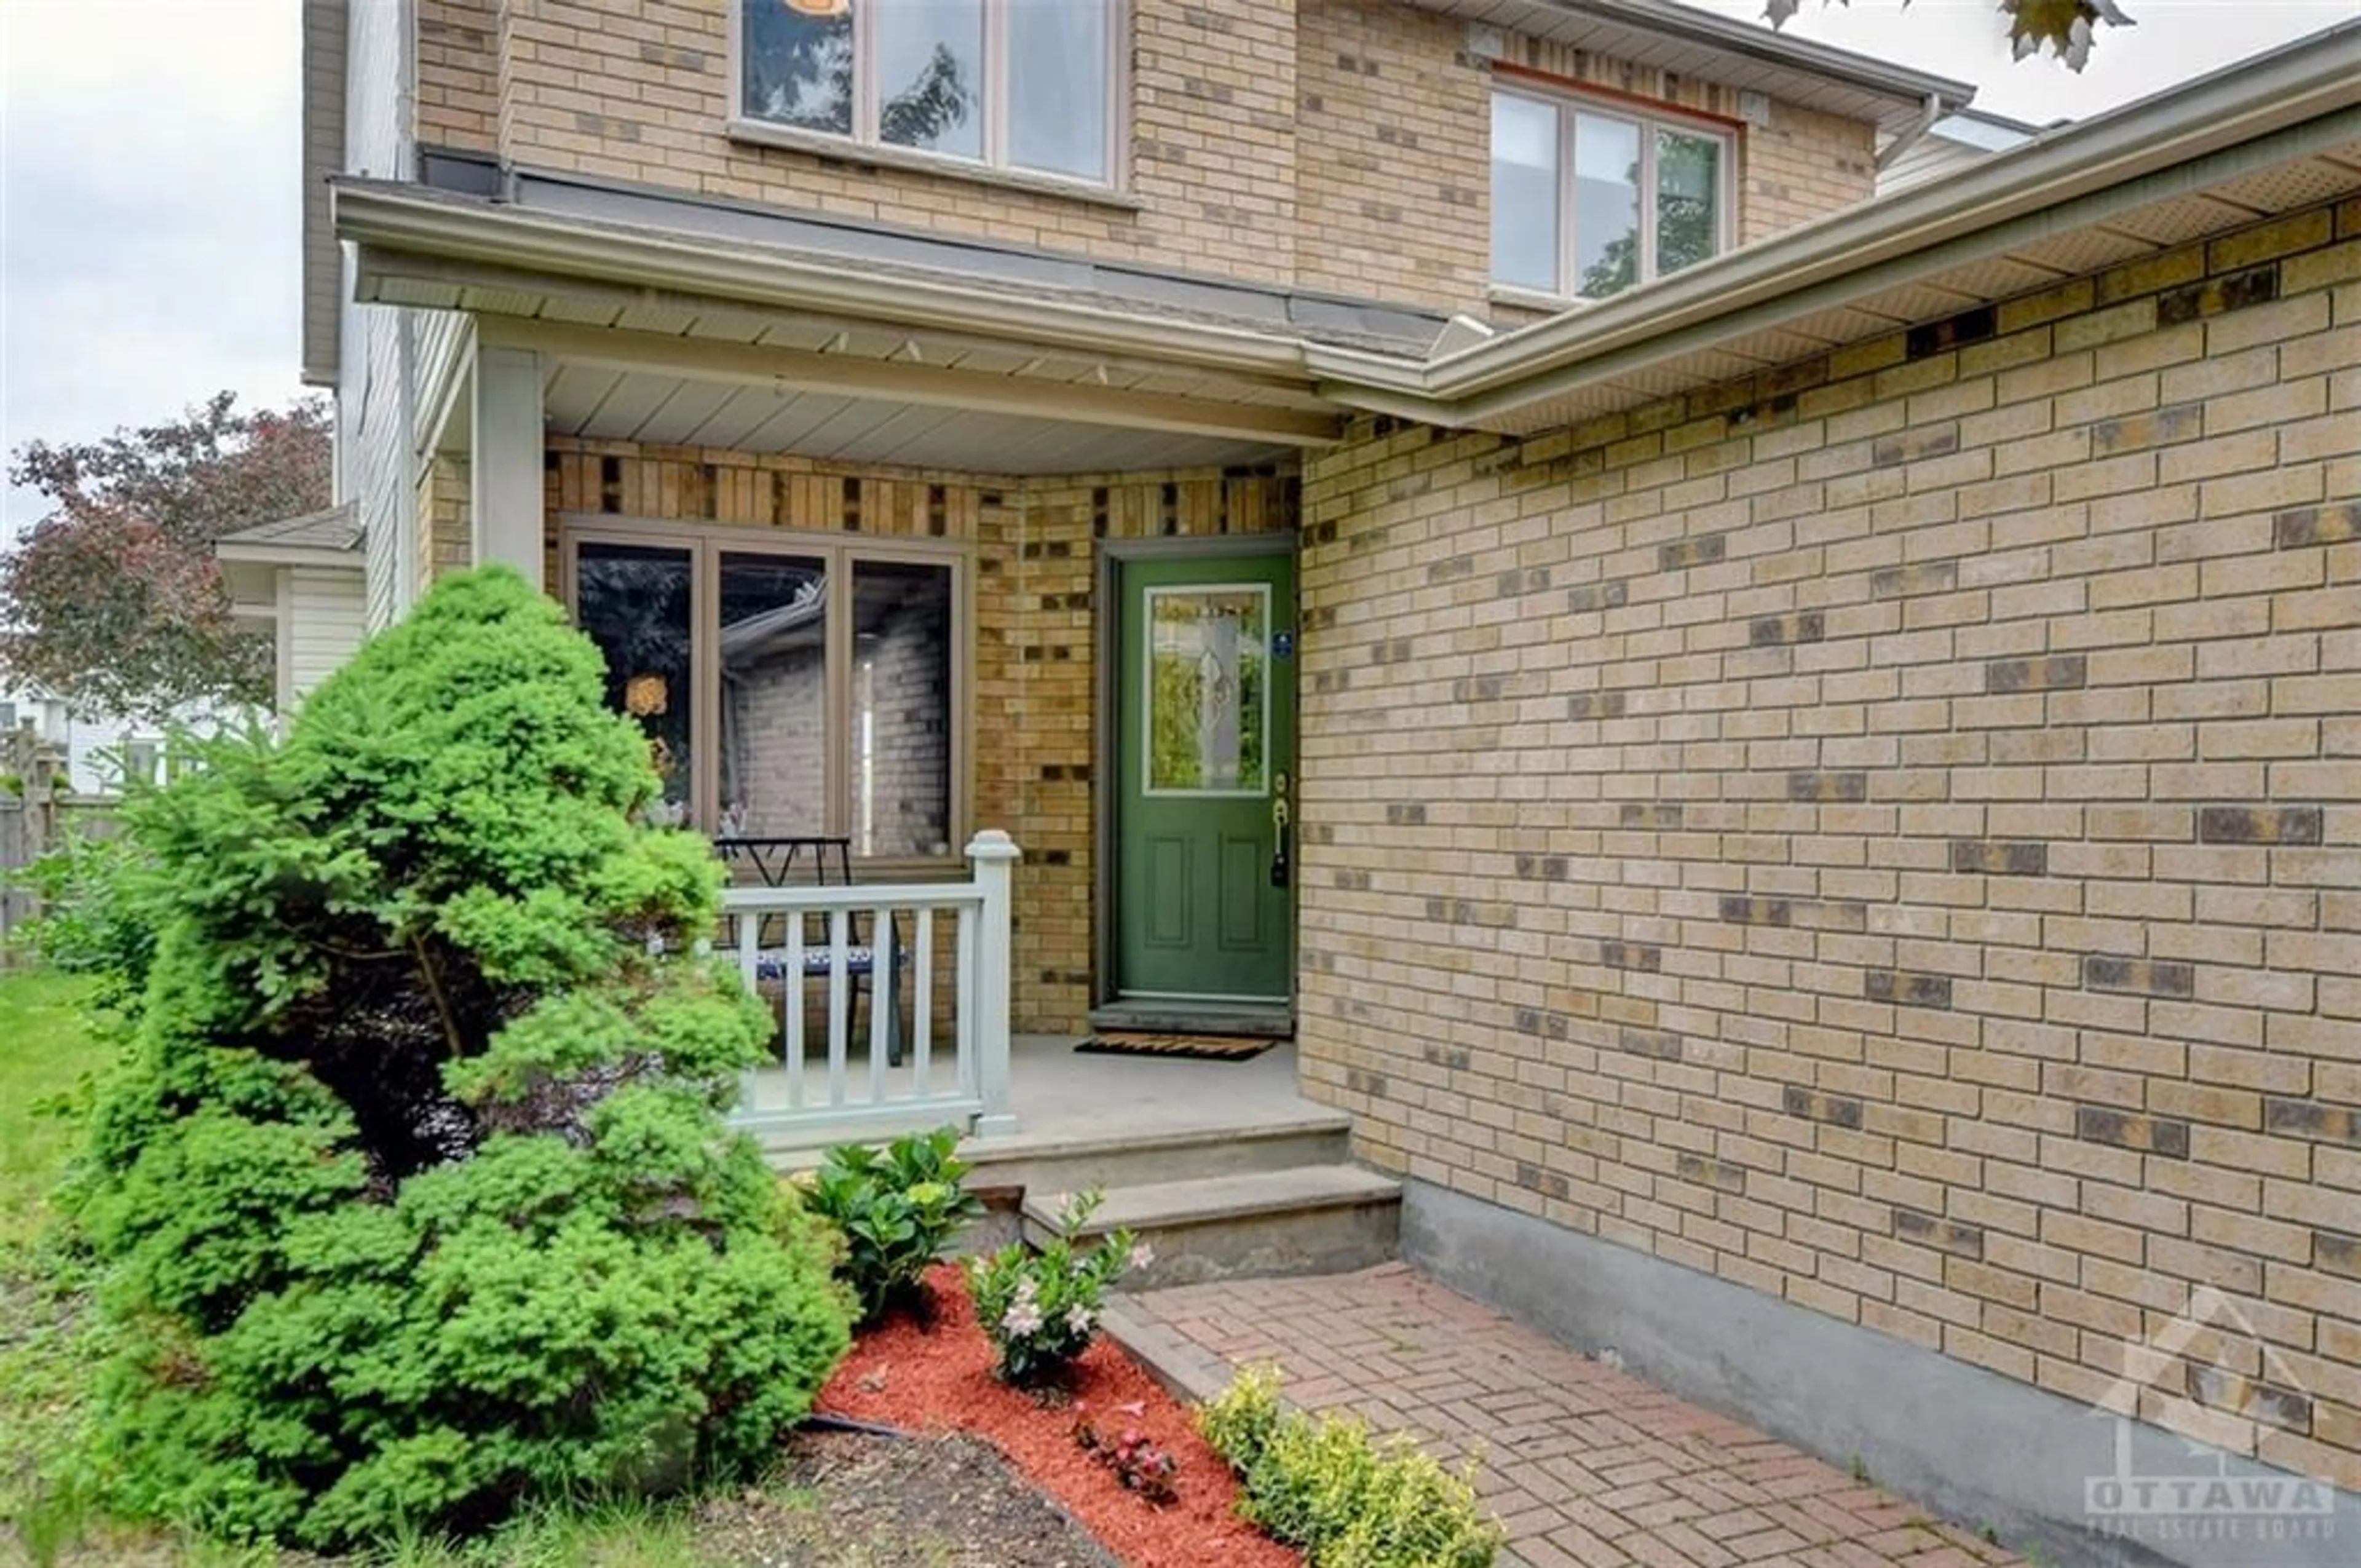 Home with brick exterior material for 63 NEWBOROUGH Cres, Ottawa Ontario K2G 6A5